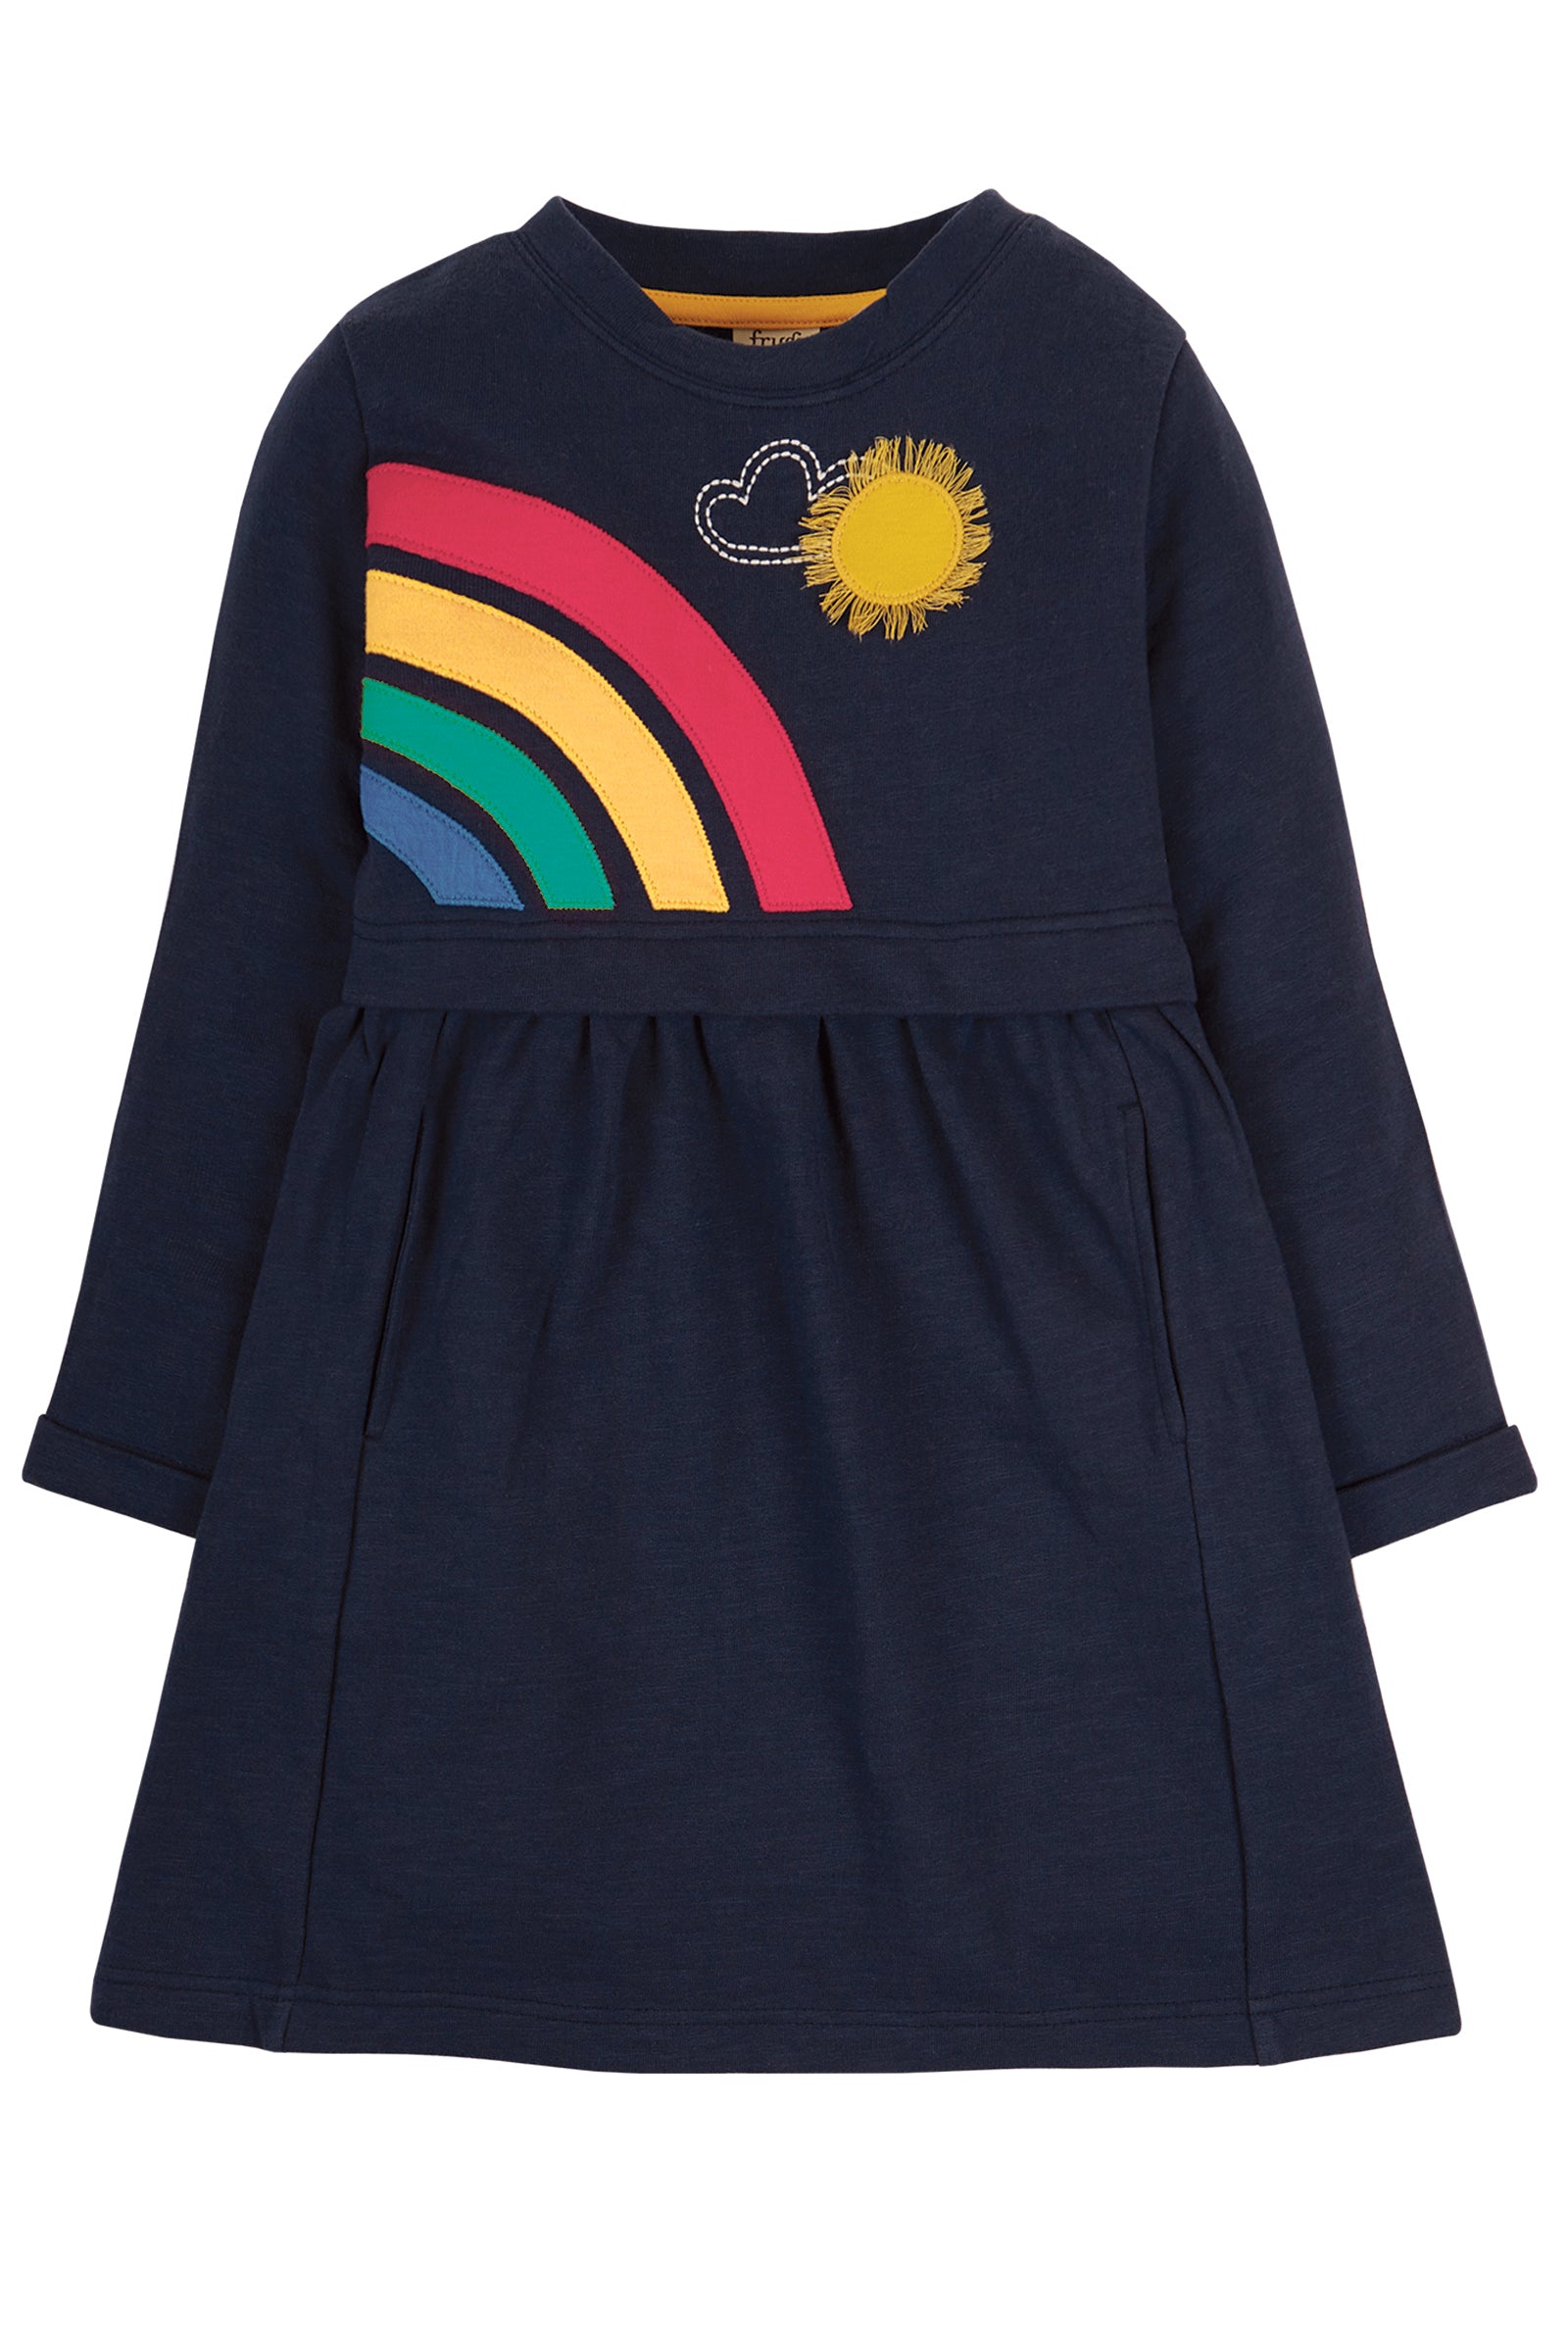 Frugi Leia Loopback Dress - Indigo/Rainbow